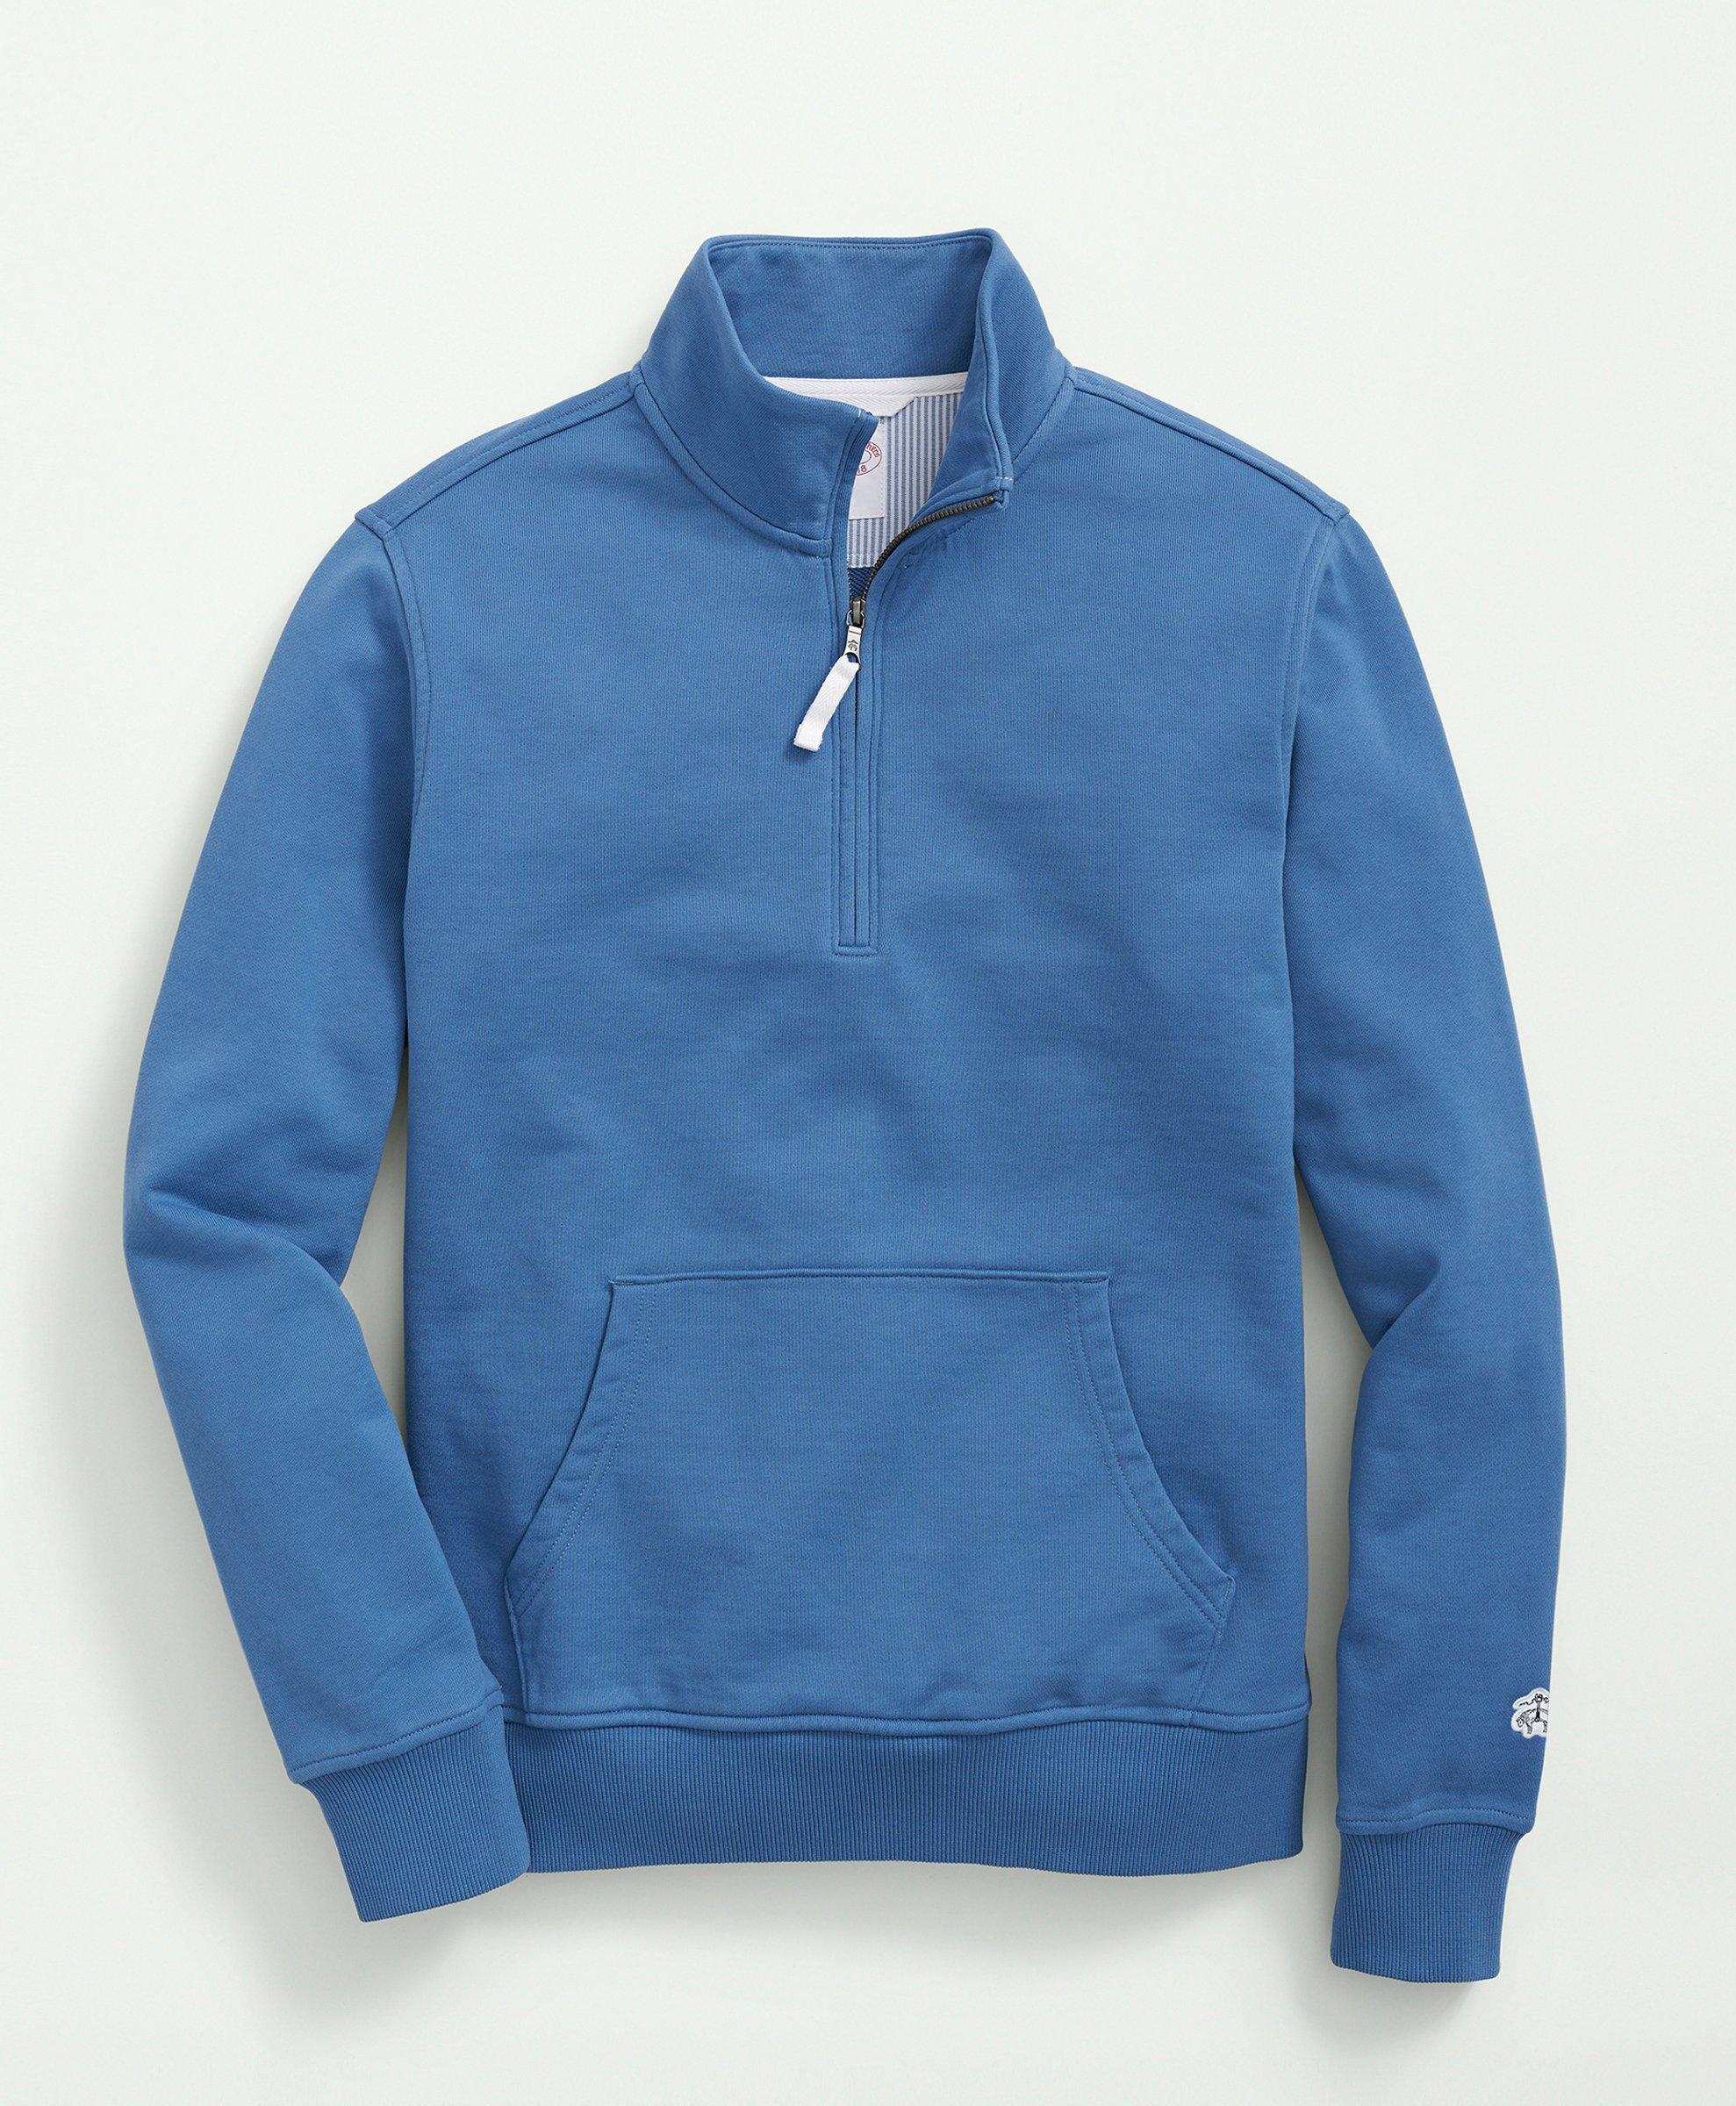 French Terry Quarter Zip Sweatshirt Blue